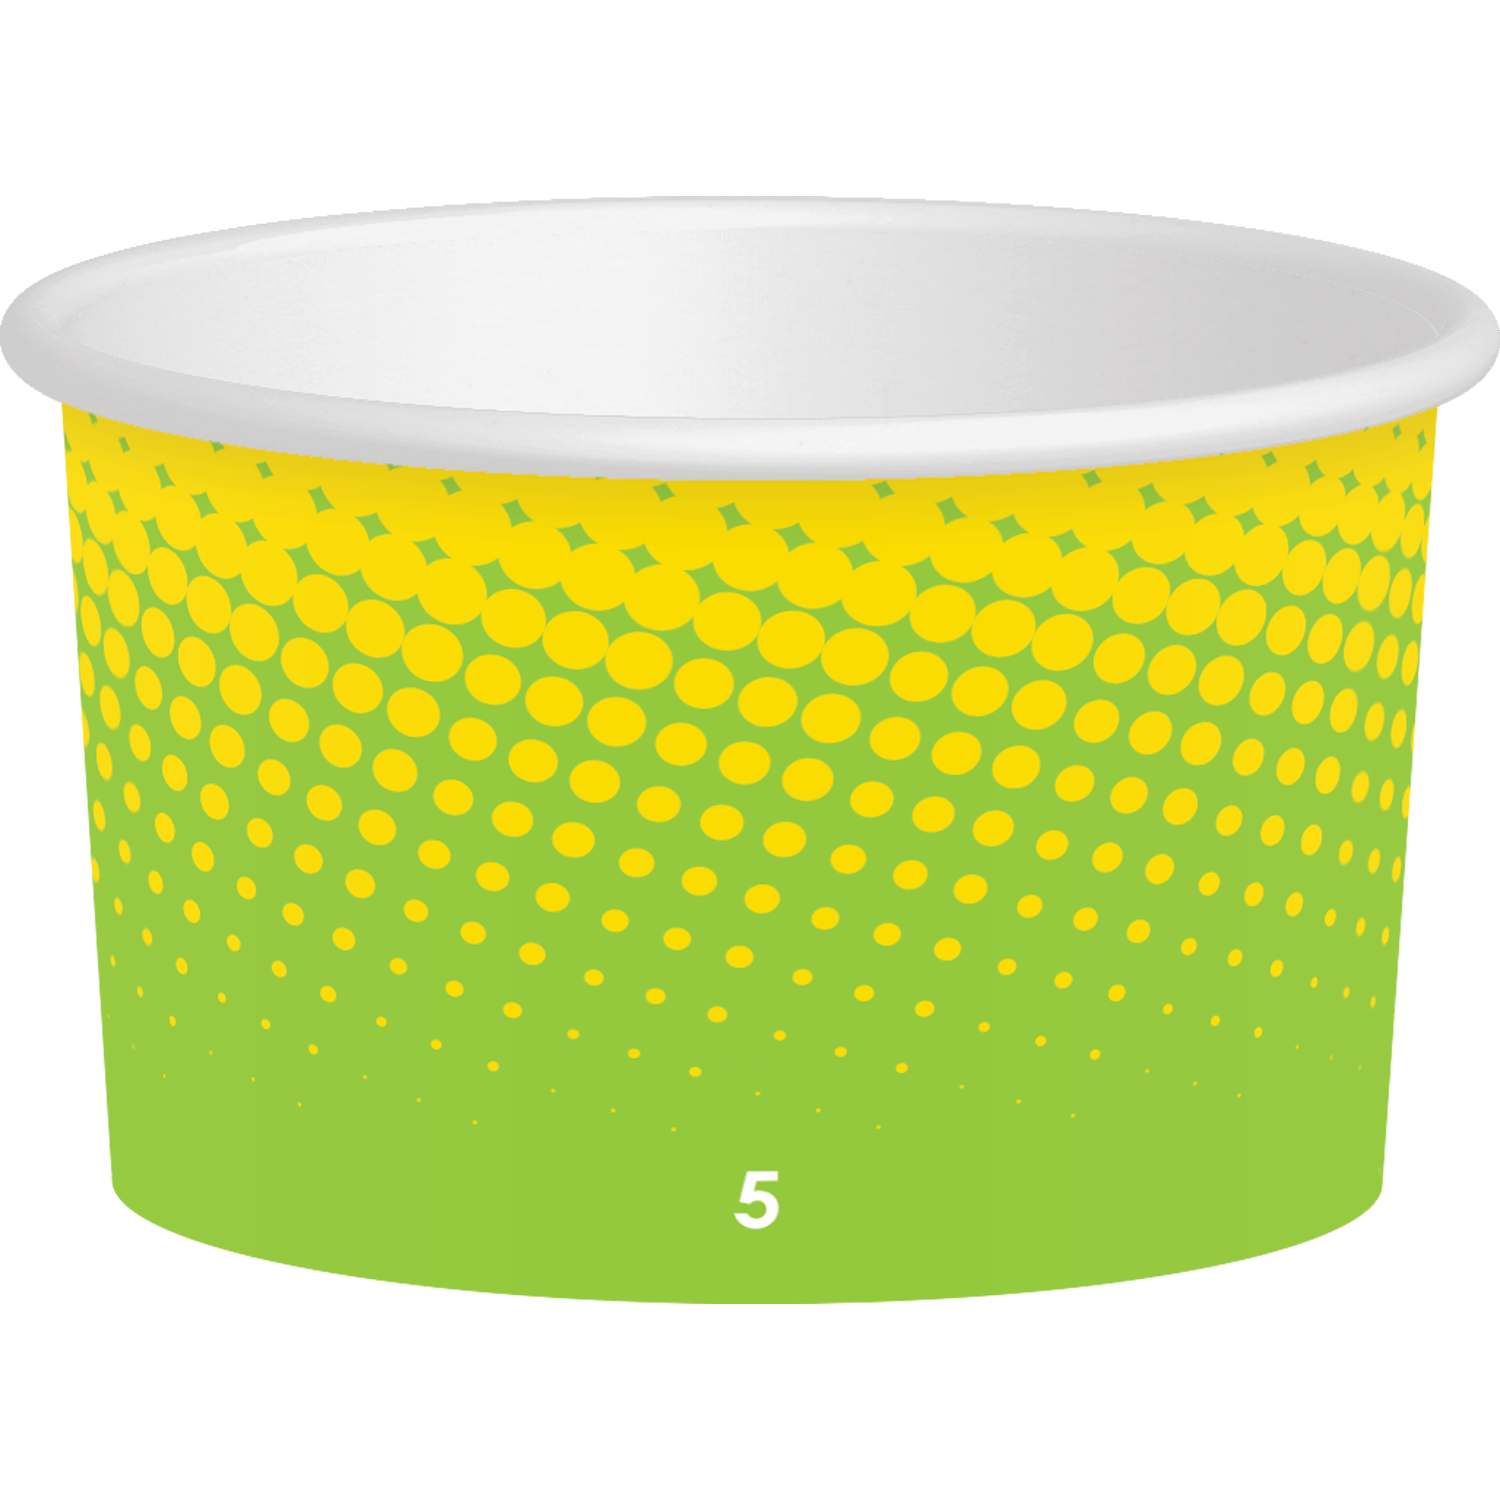 5oz Paper Ice Cream Cup, Green, 1000/Case - mastersupplyonline